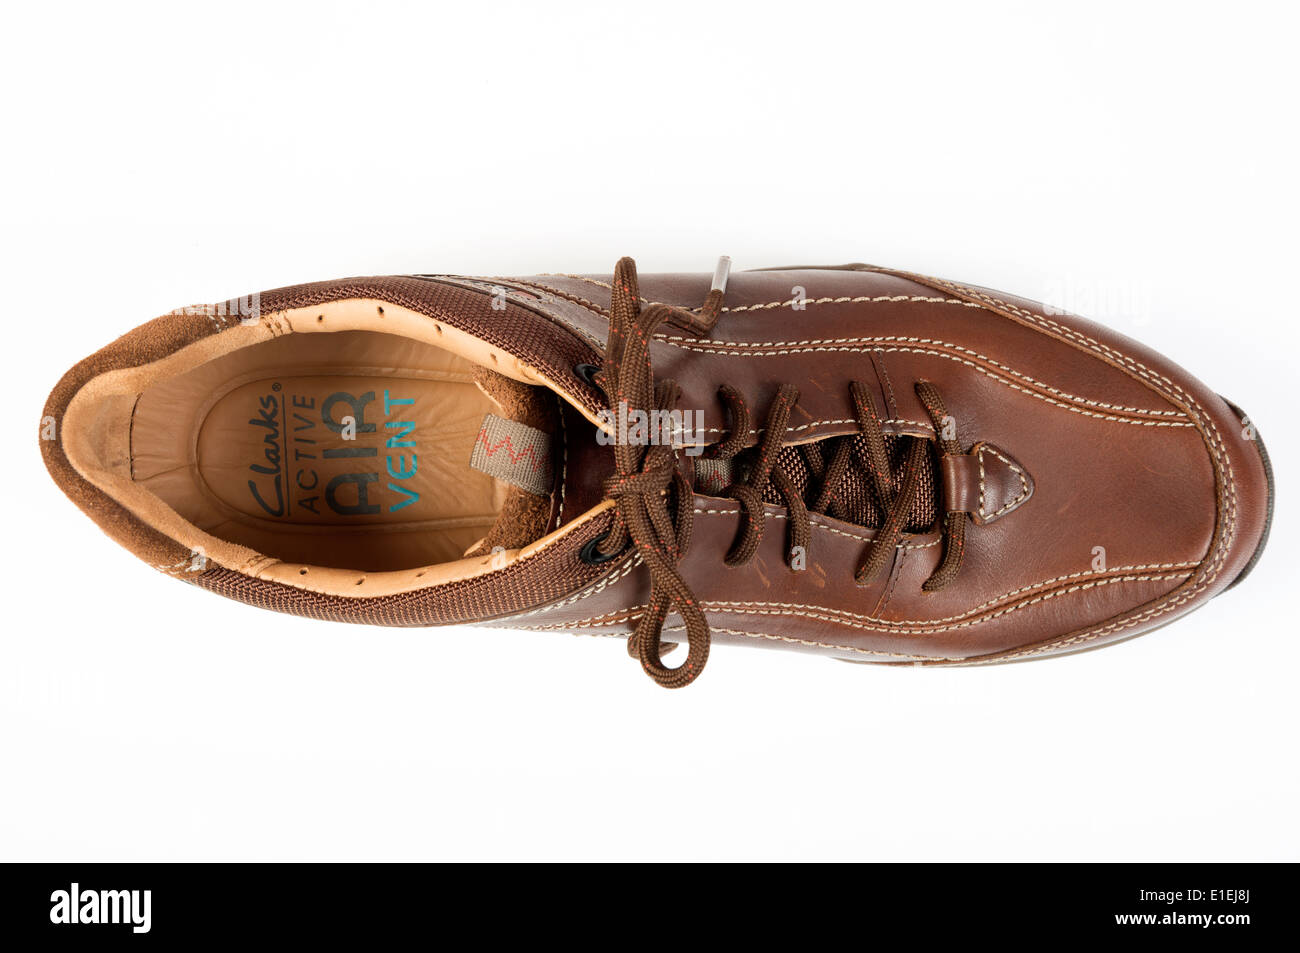 Mens clarks active shoes fotografías e imágenes de alta resolución - Alamy